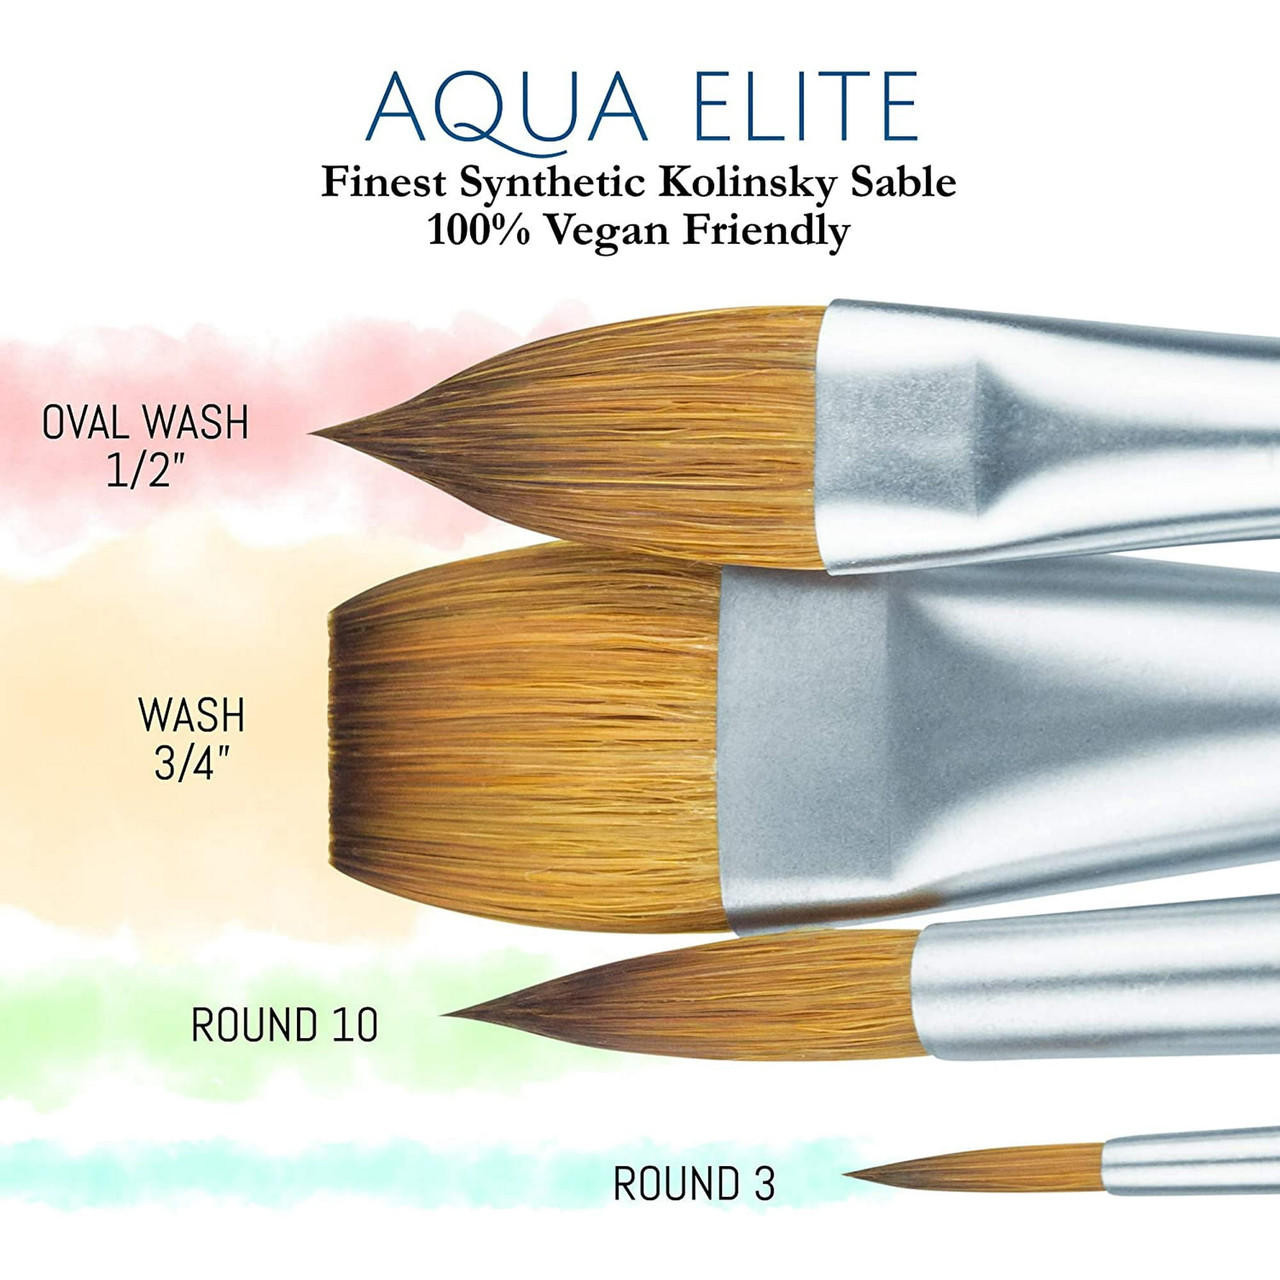 Princeton 4850 Aqua Elite Synthetic Kolinsky Sable Brush Wash 1/2